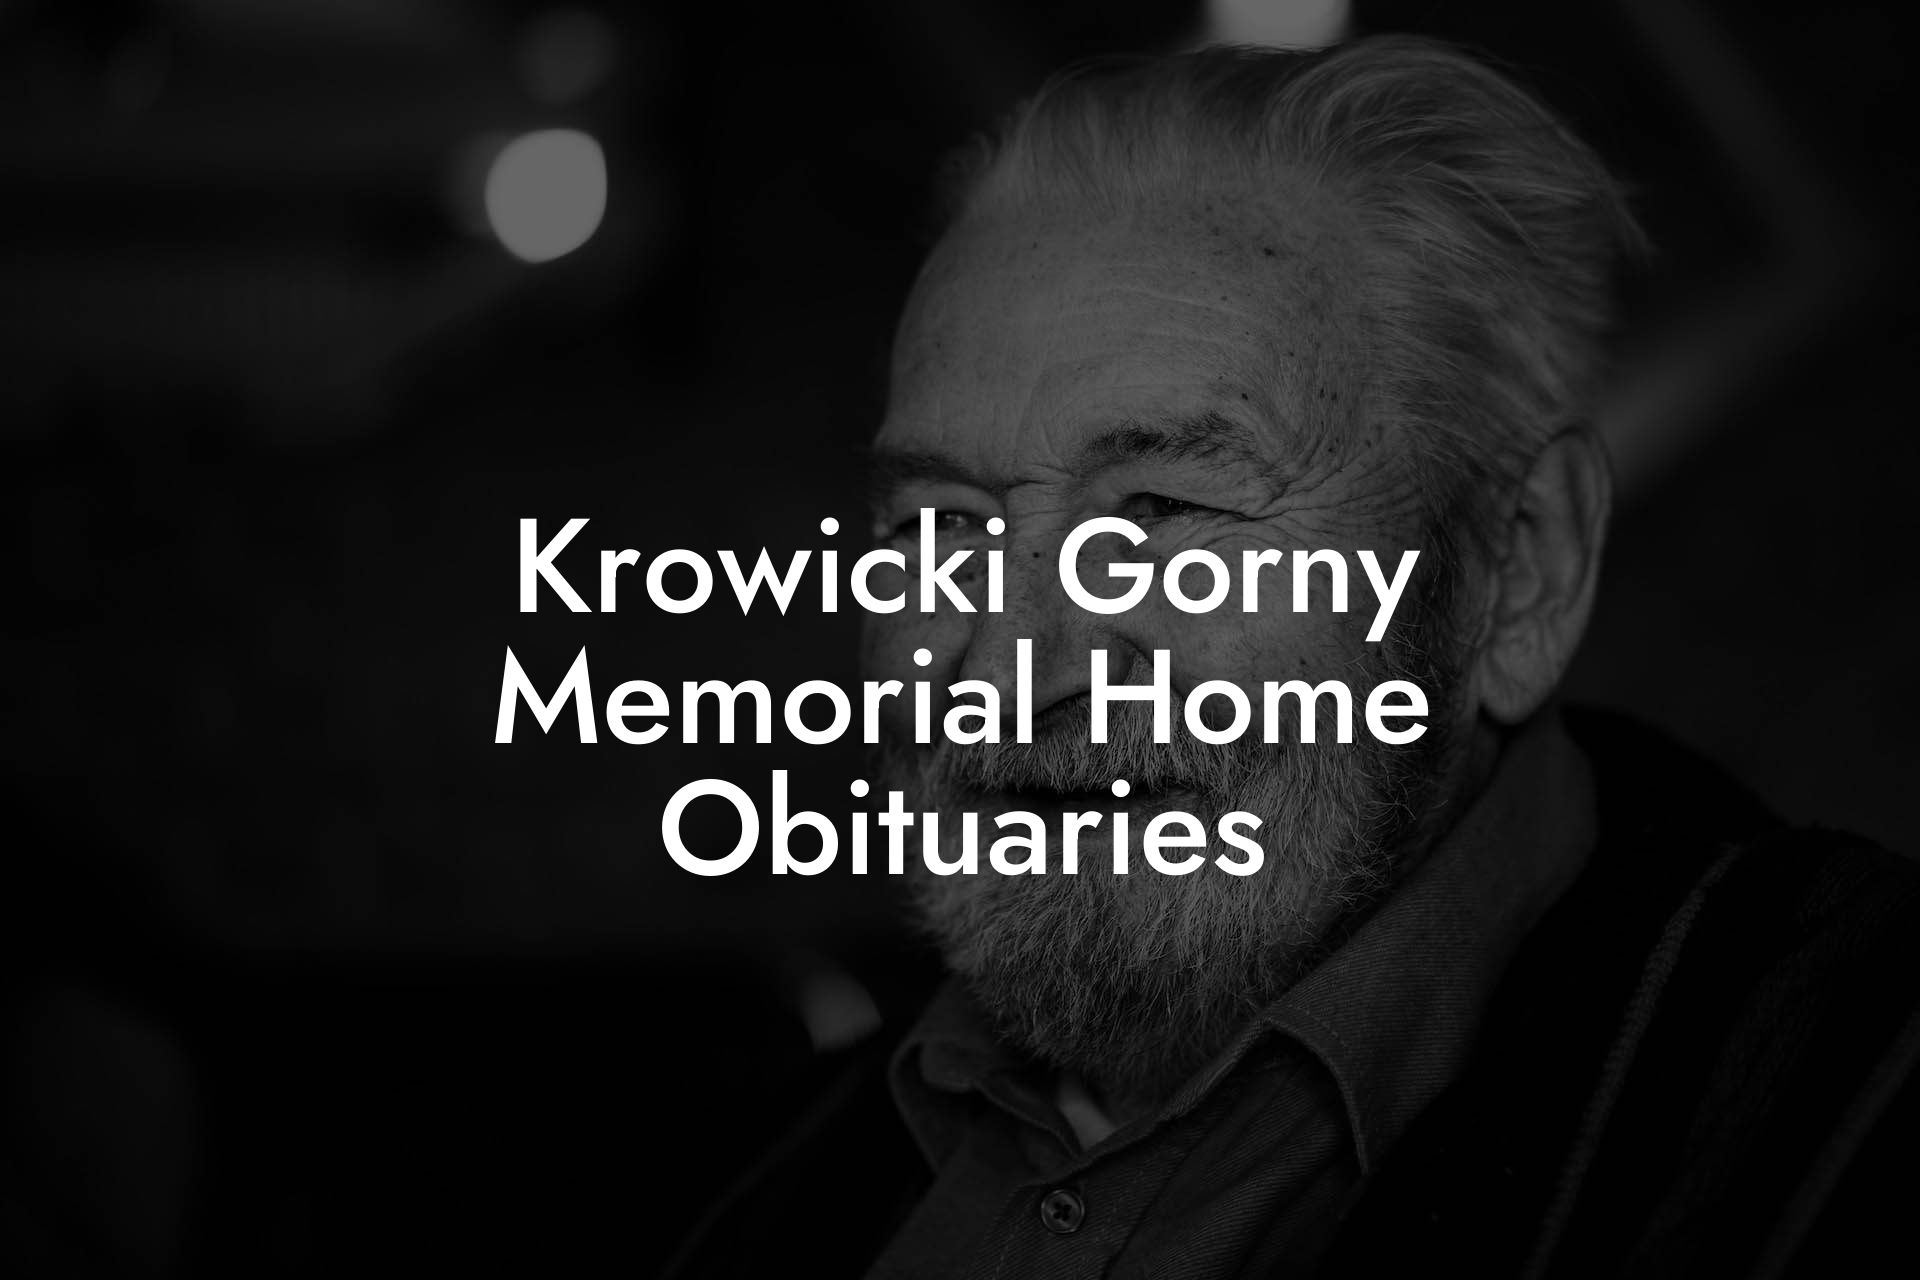 Krowicki Gorny Memorial Home Obituaries